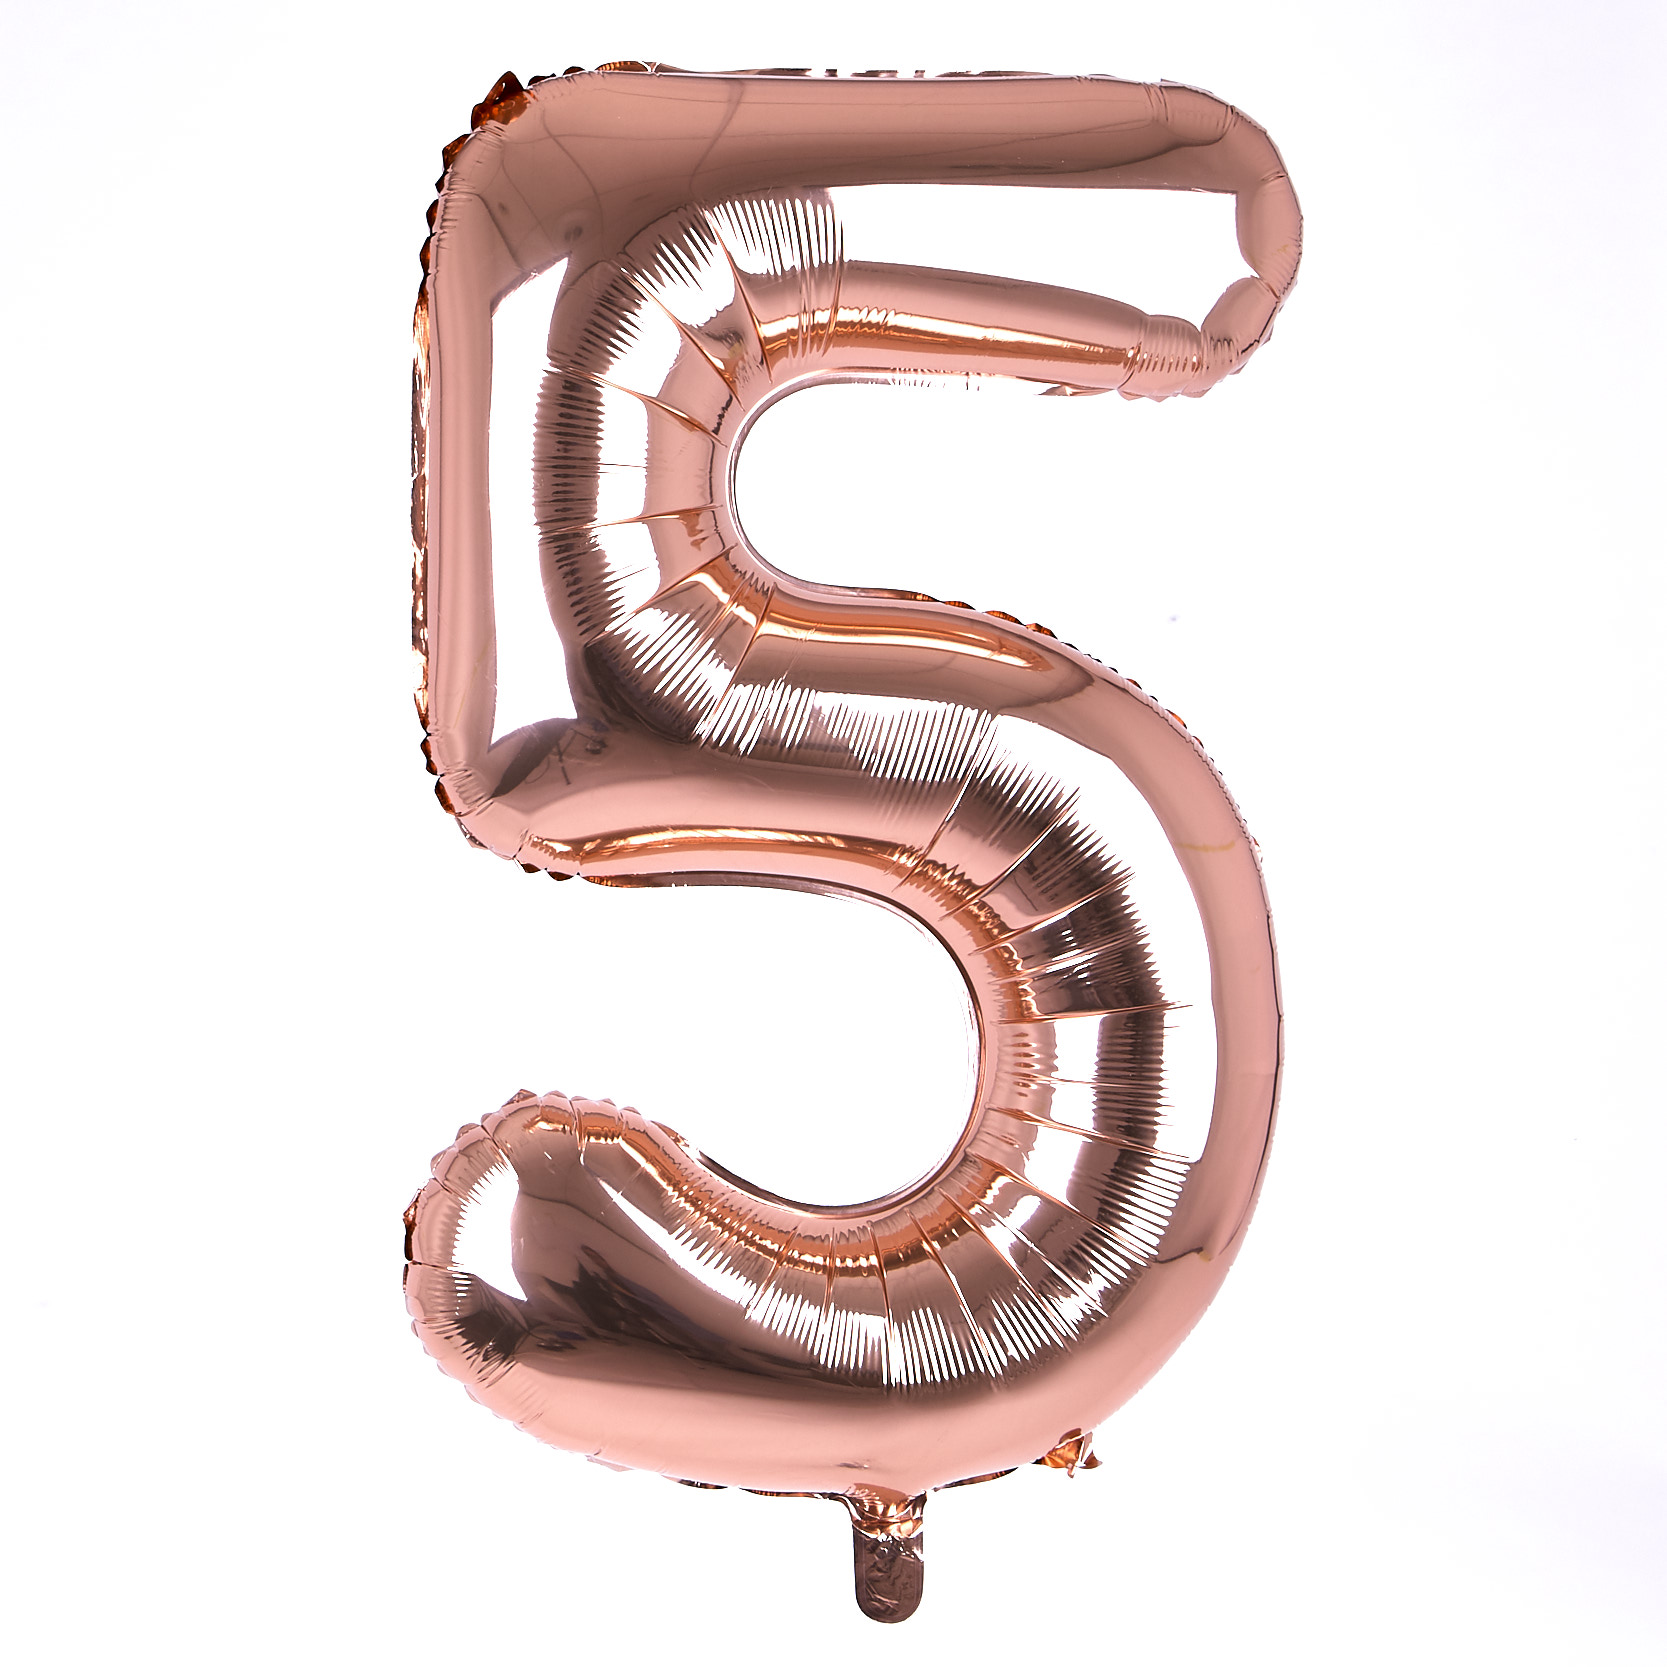 number 5 helium balloon